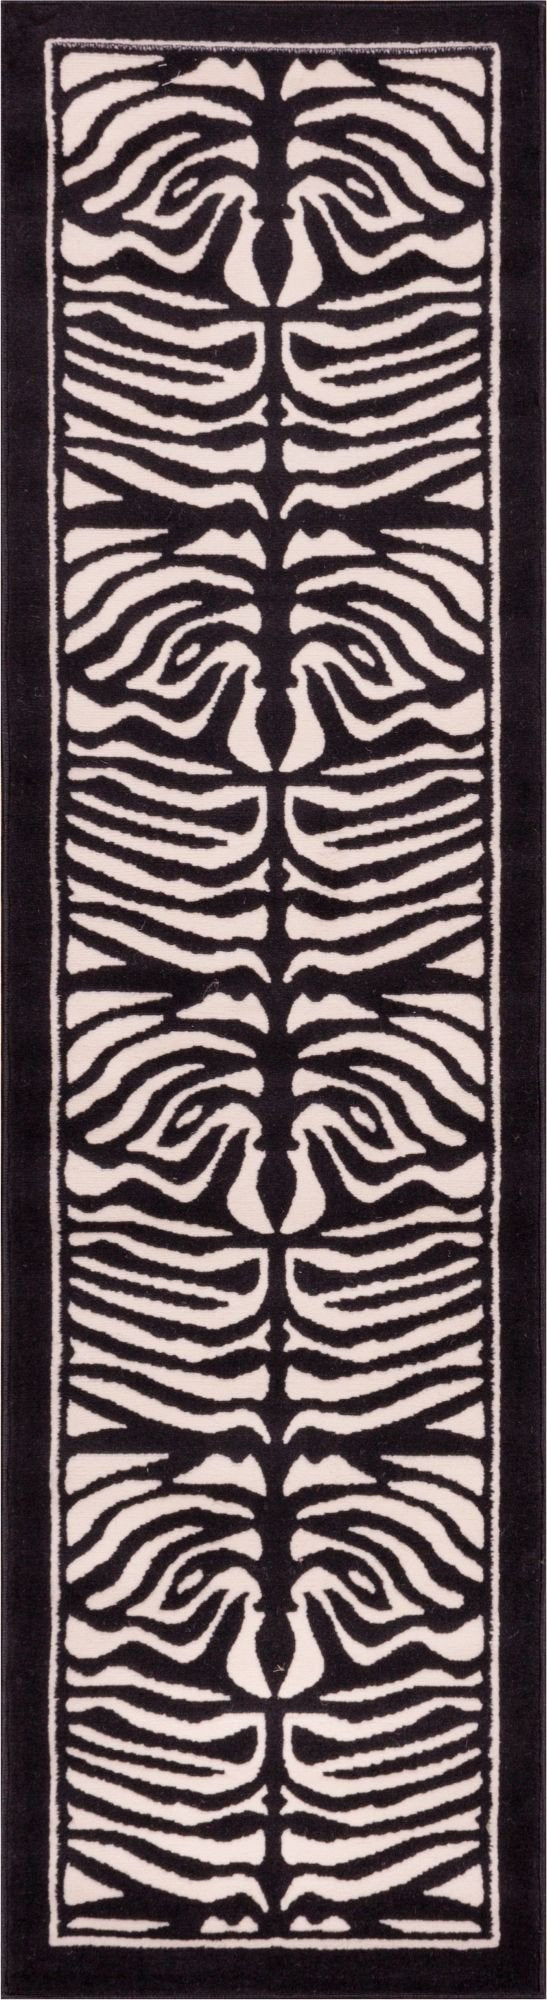 Zebra Ivory Modern Rug 1802